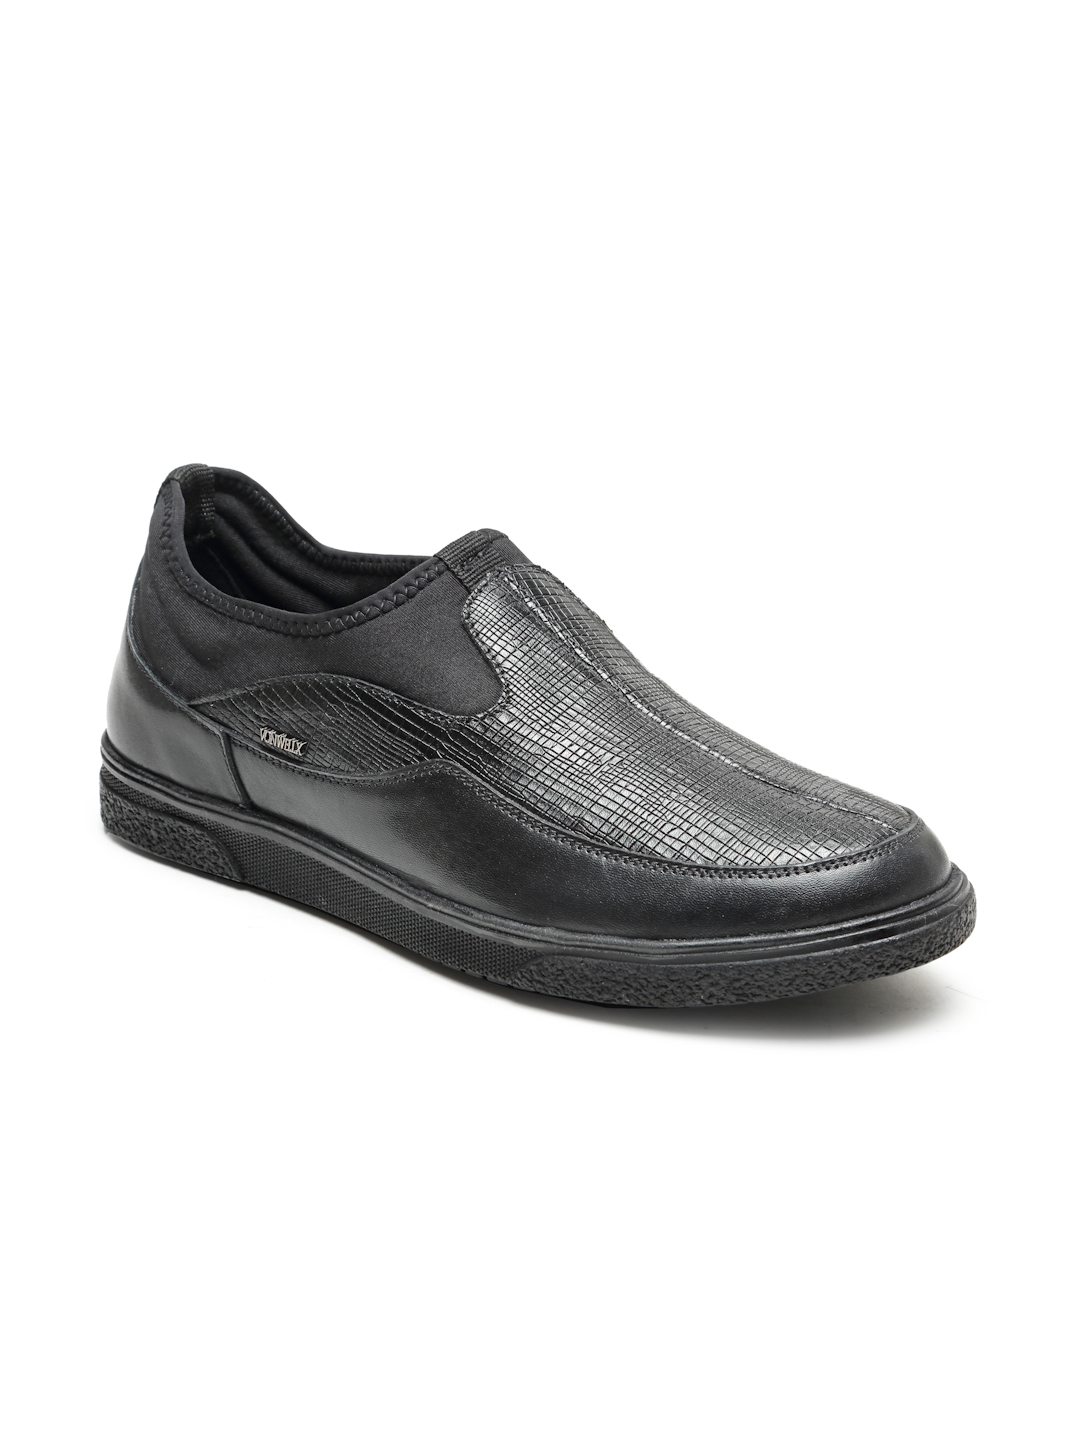 Buy Von Wellx Germany Comfort Men's Black Casual Loafers Everett Online in Kandy